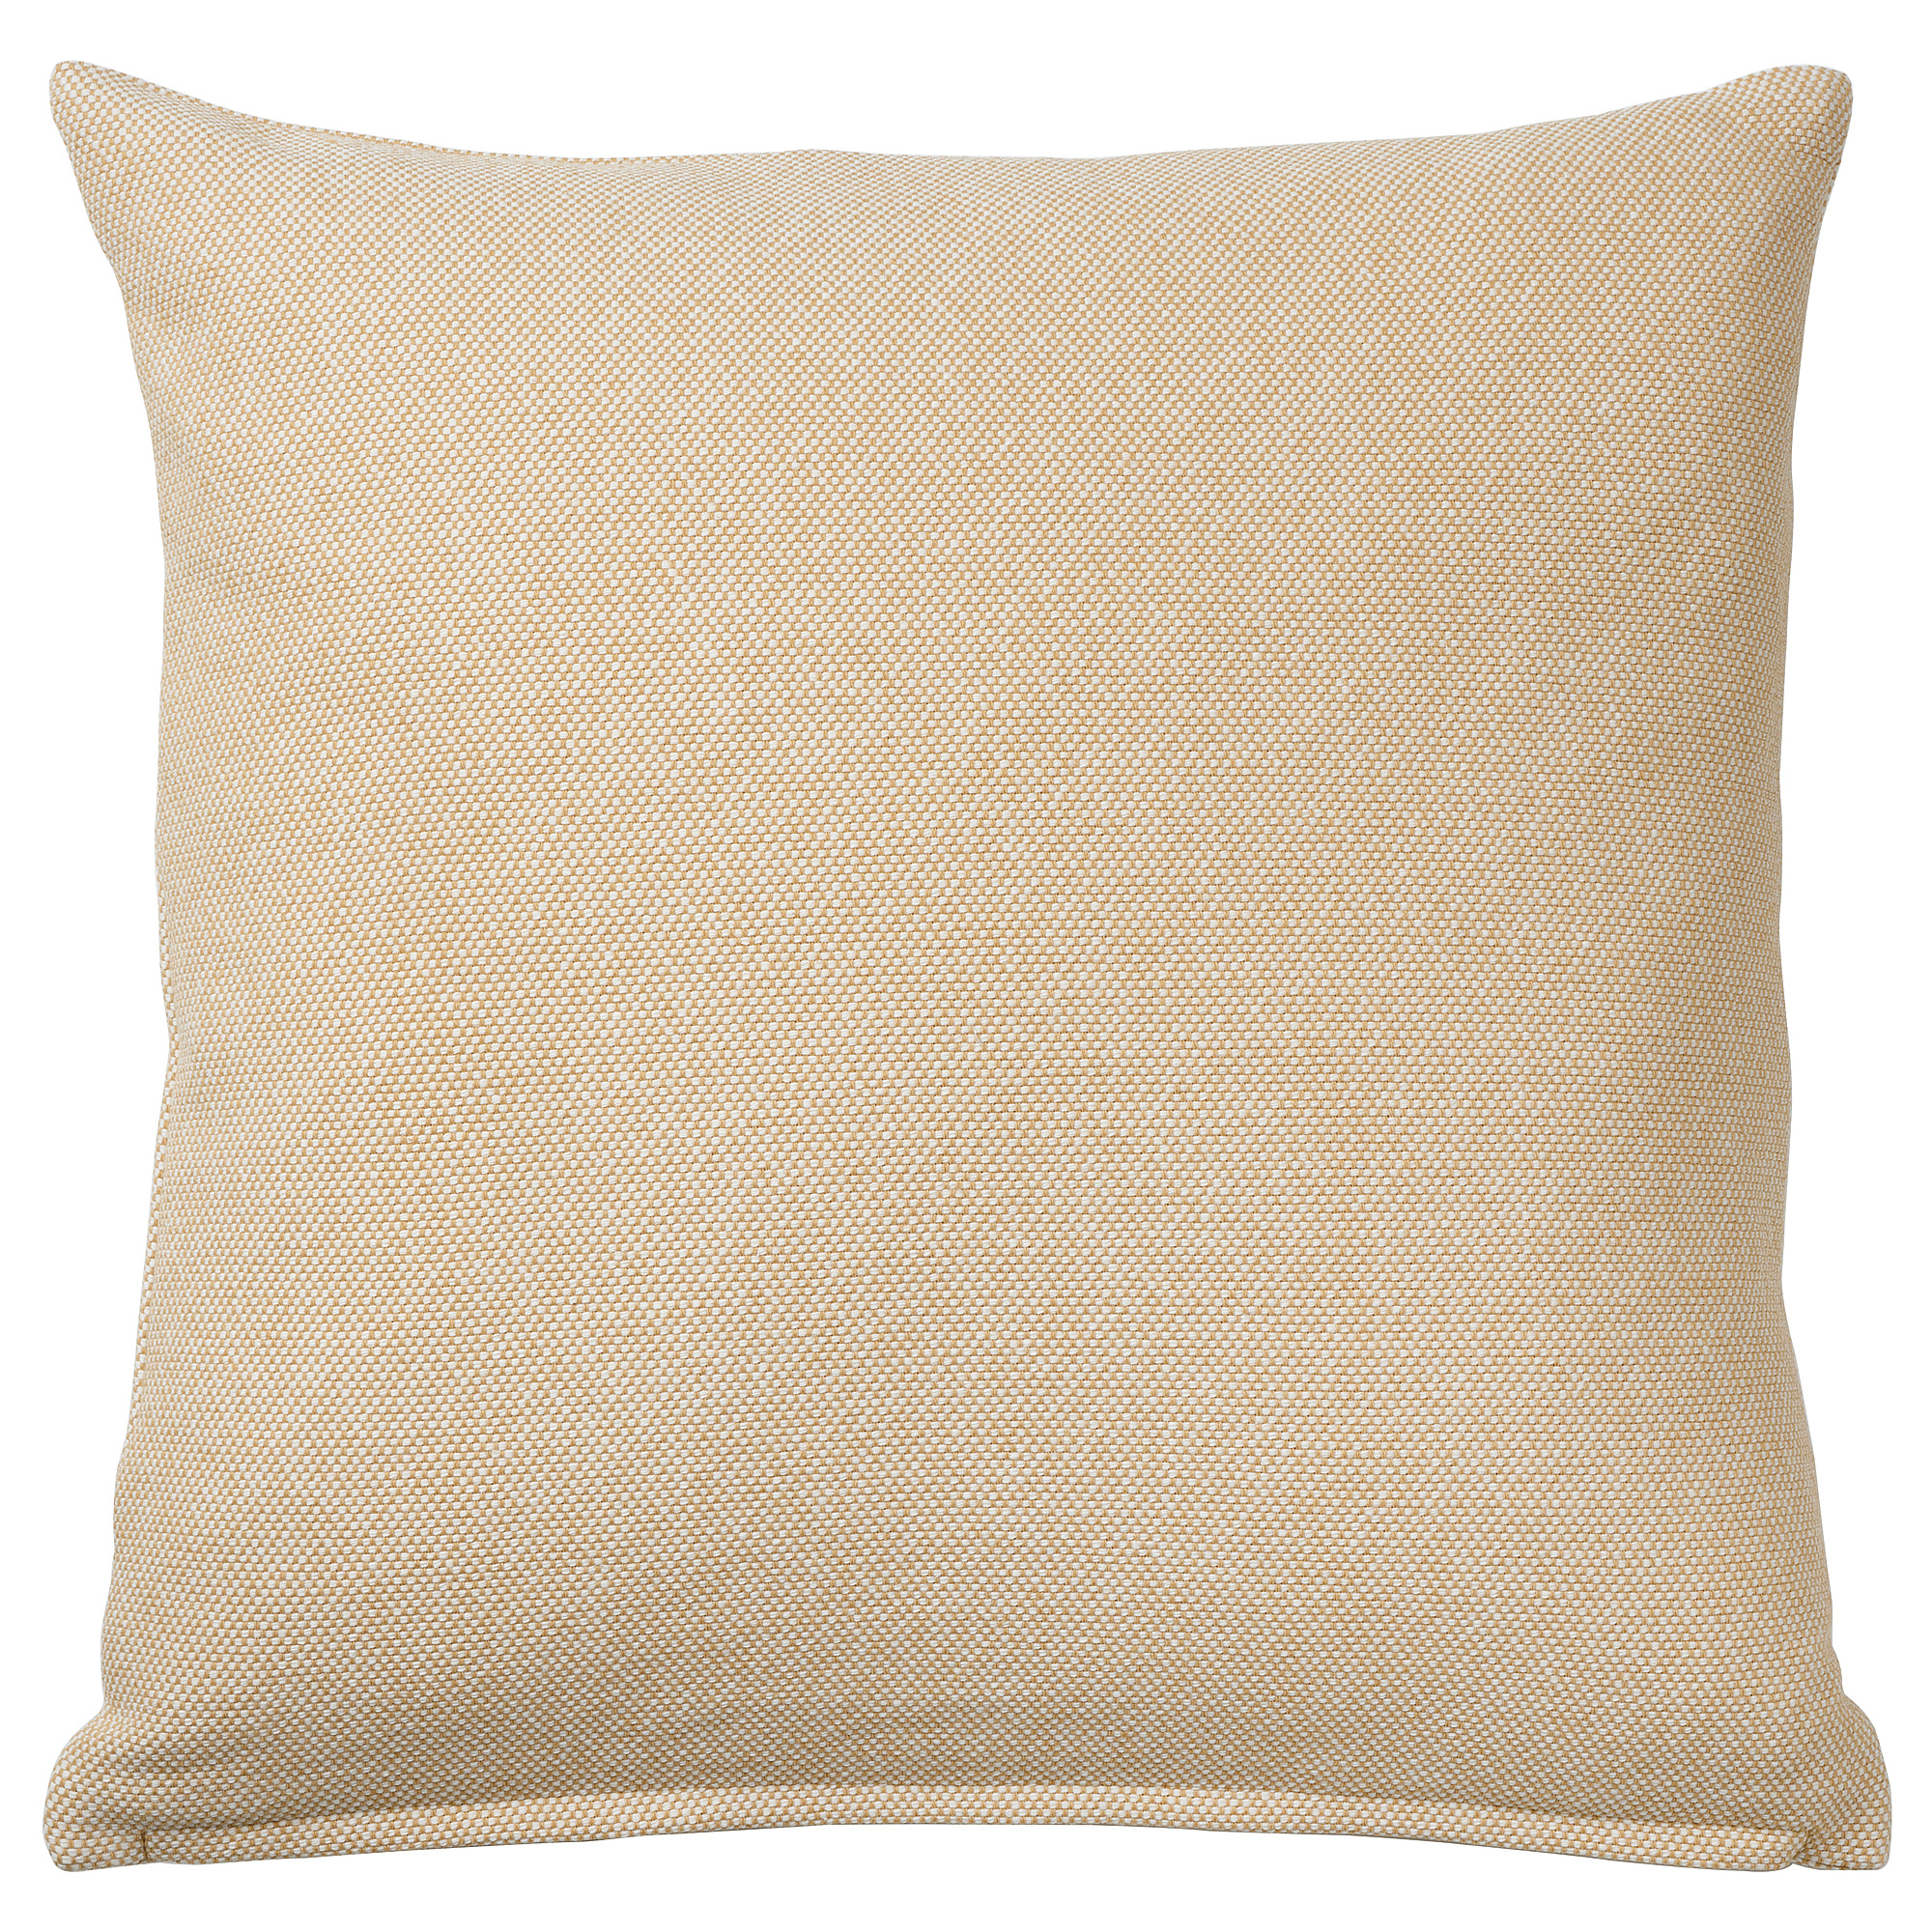 SANDTRAV cushion